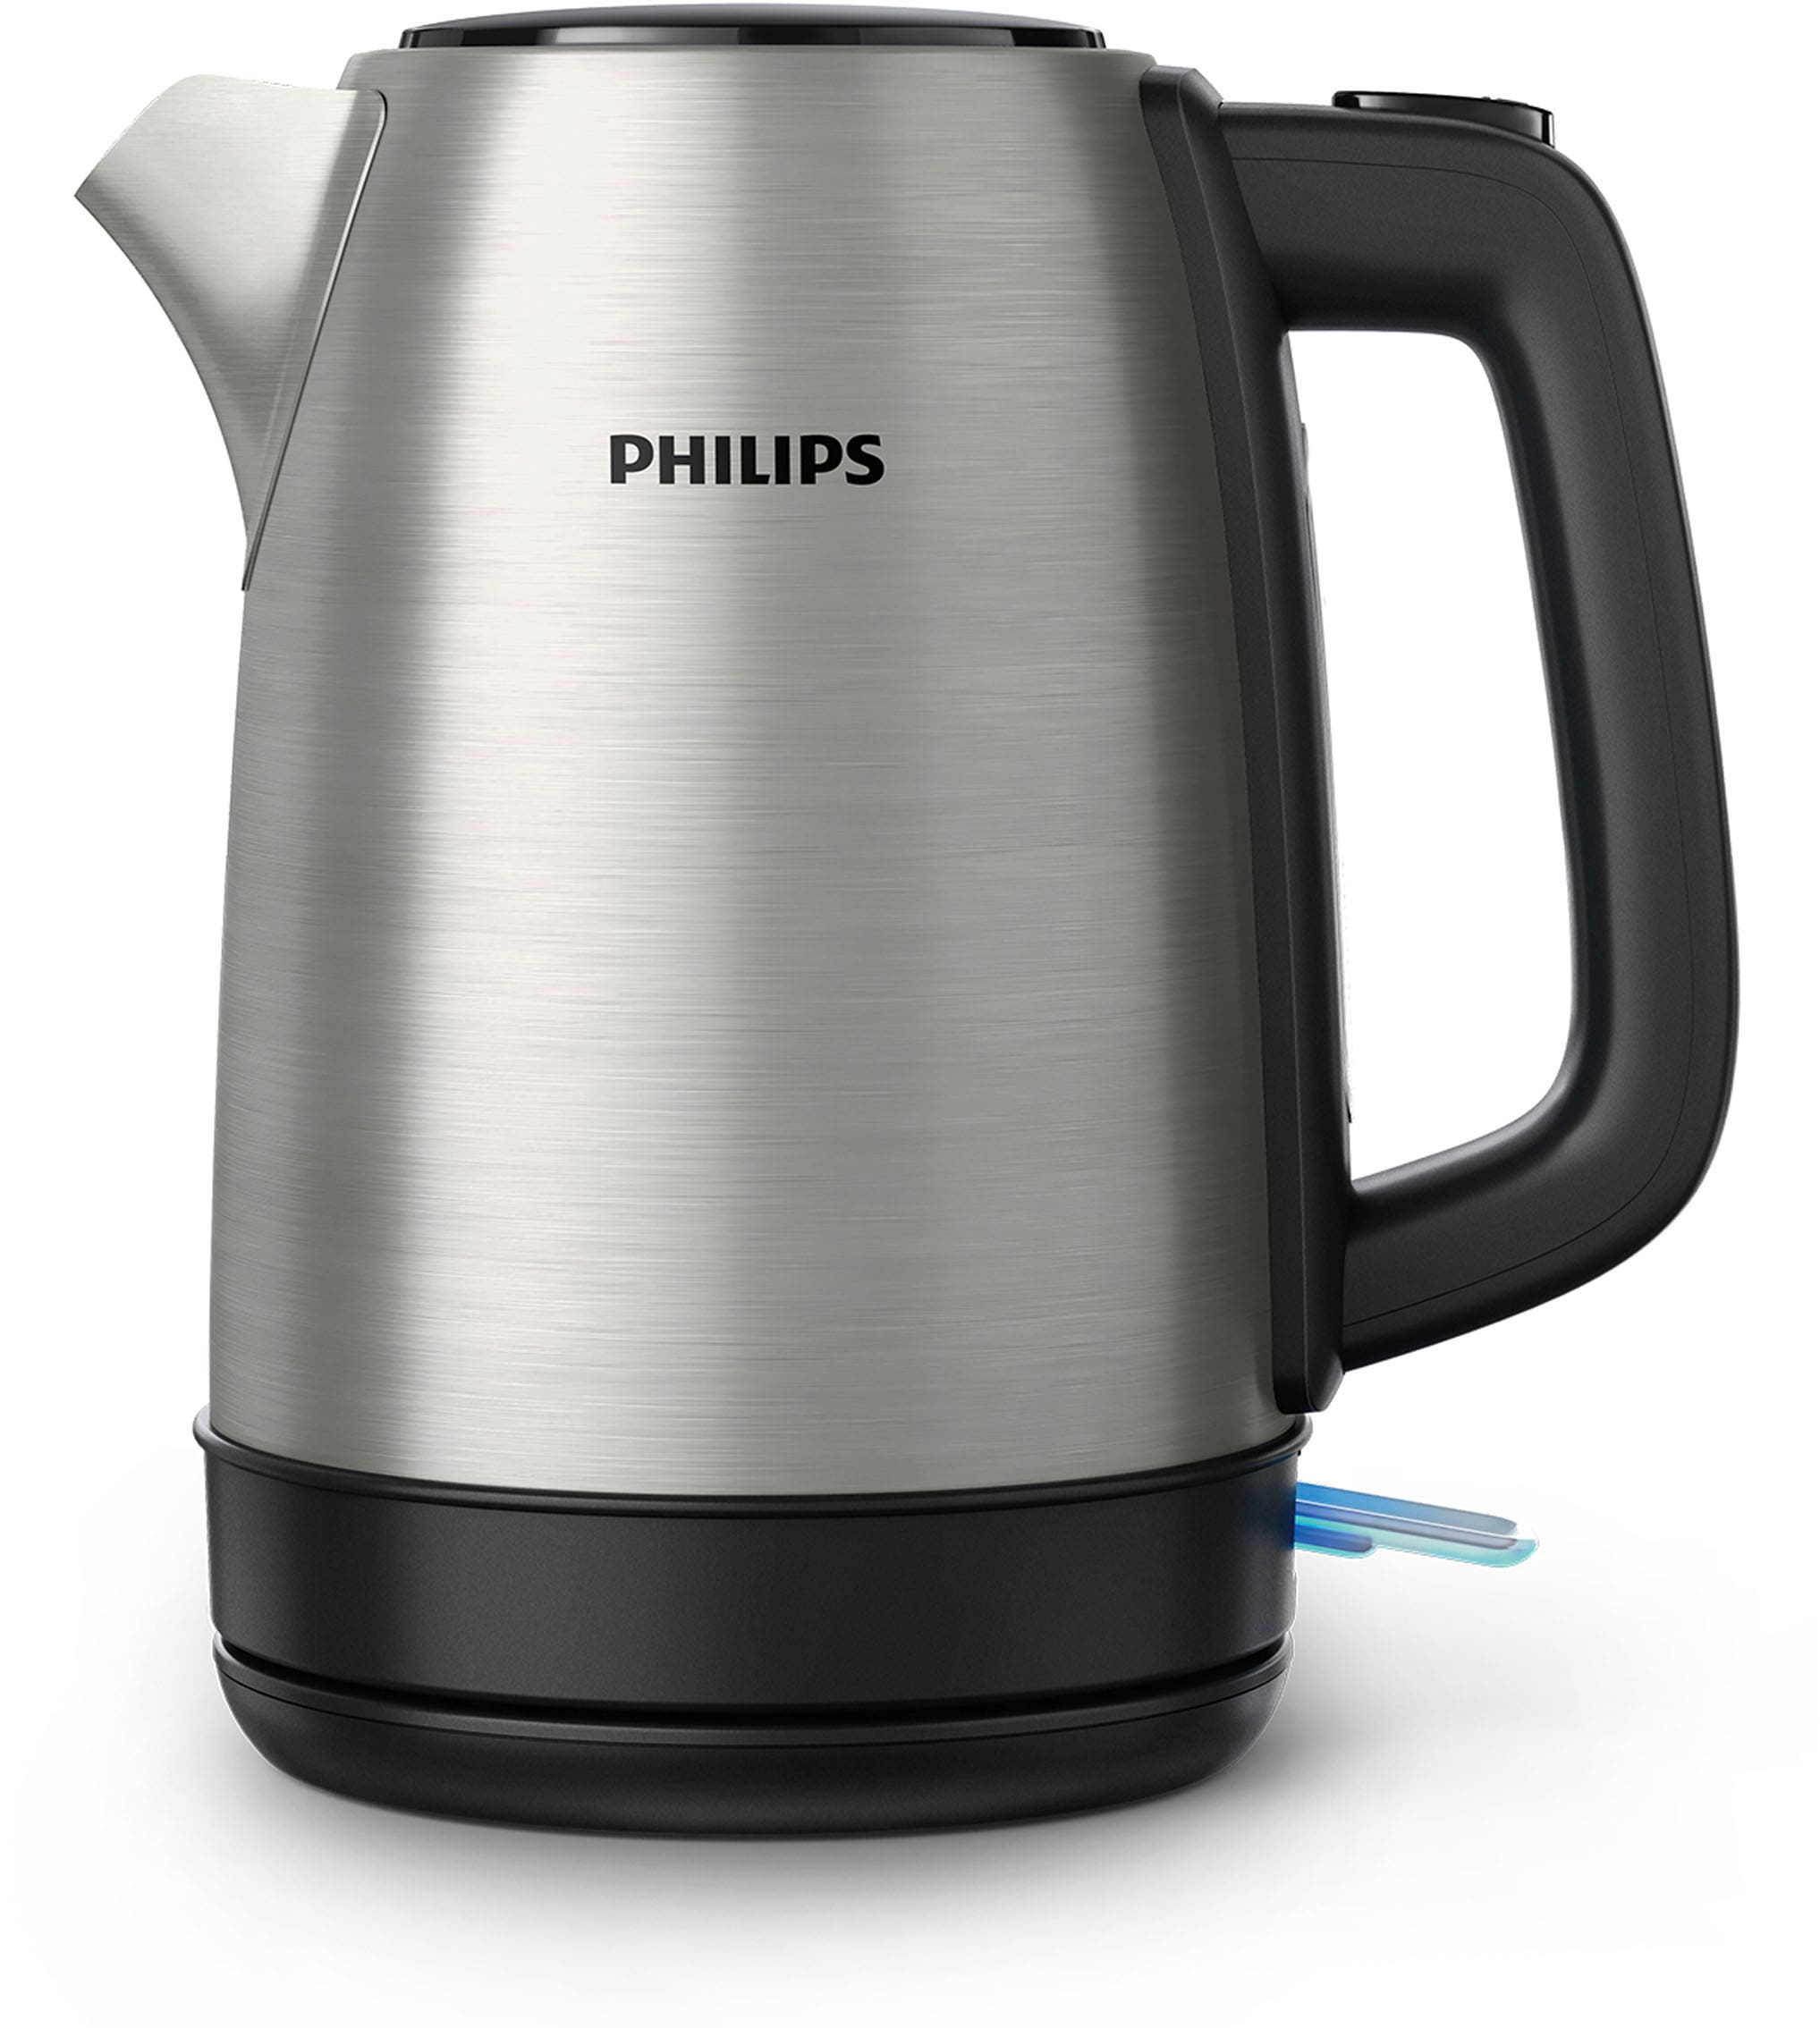 Philips Wasserkocher »HD9350/90 Daily Collection«, 1,7 l, 2200 W, Trockengehschutz